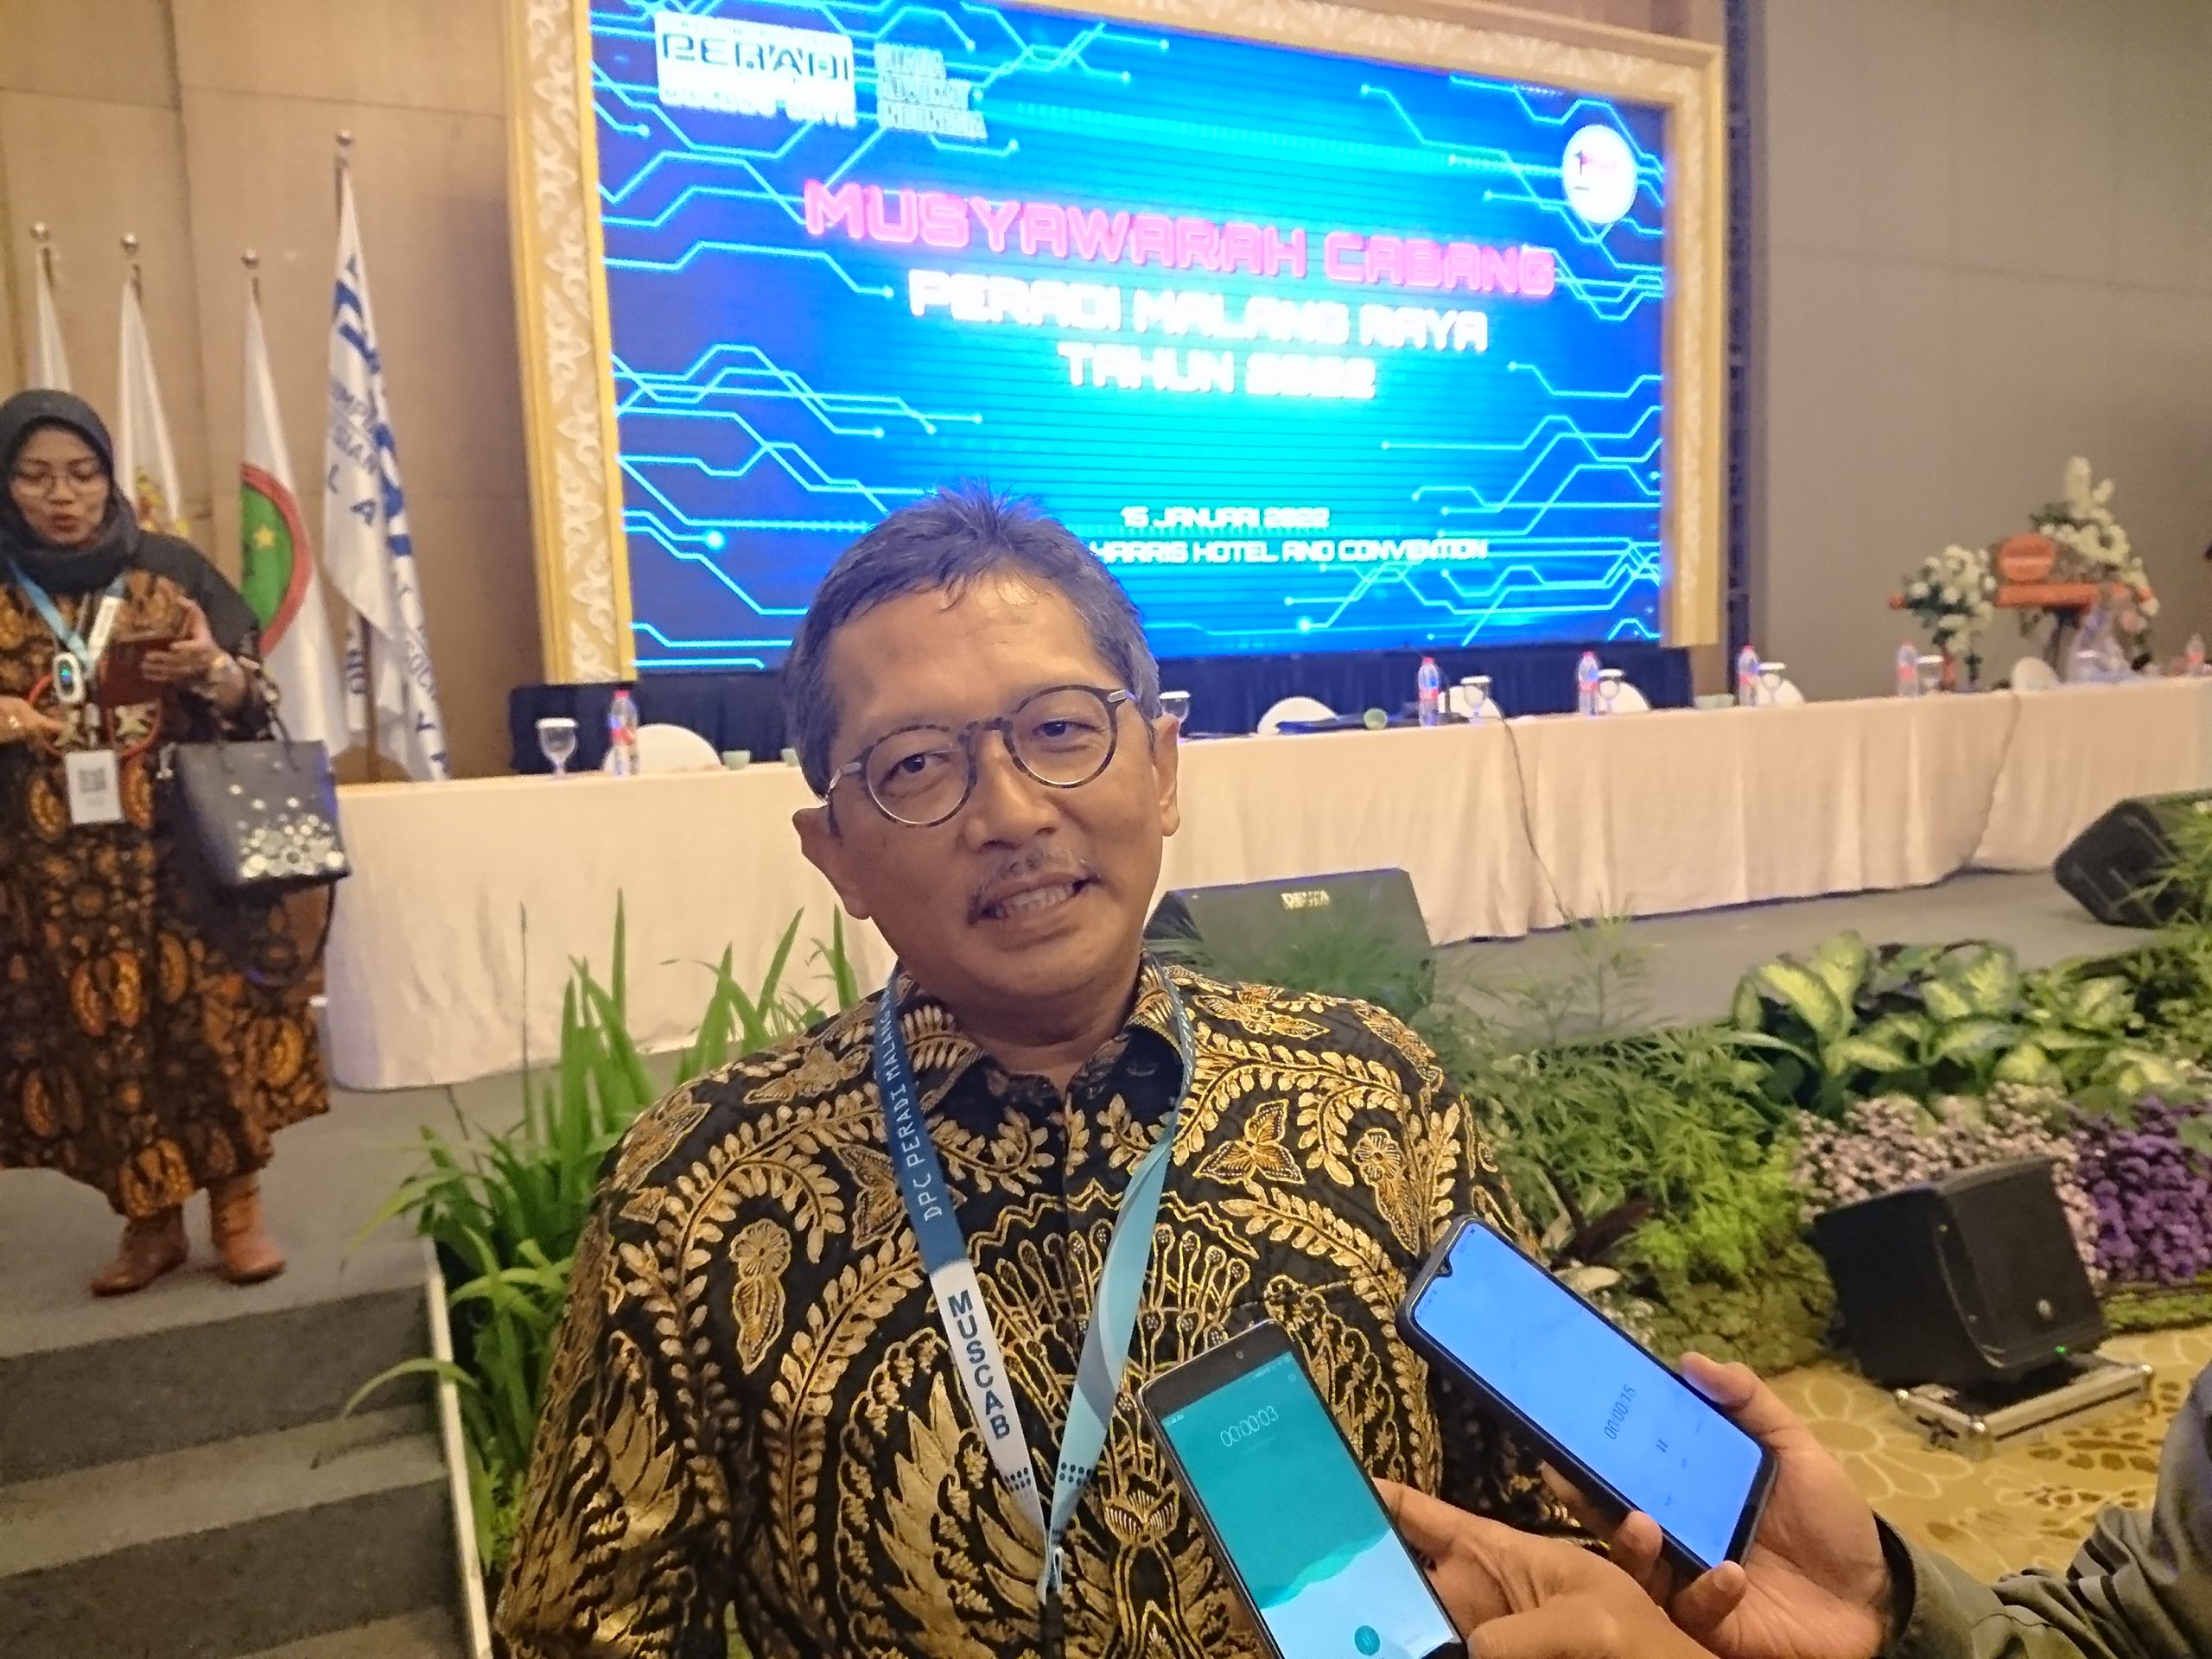 Muscab PERADI Malang Raya 2022 Sukses Digelar, Iwan Kuswardi Terpilih Kembali Jadi Ketua